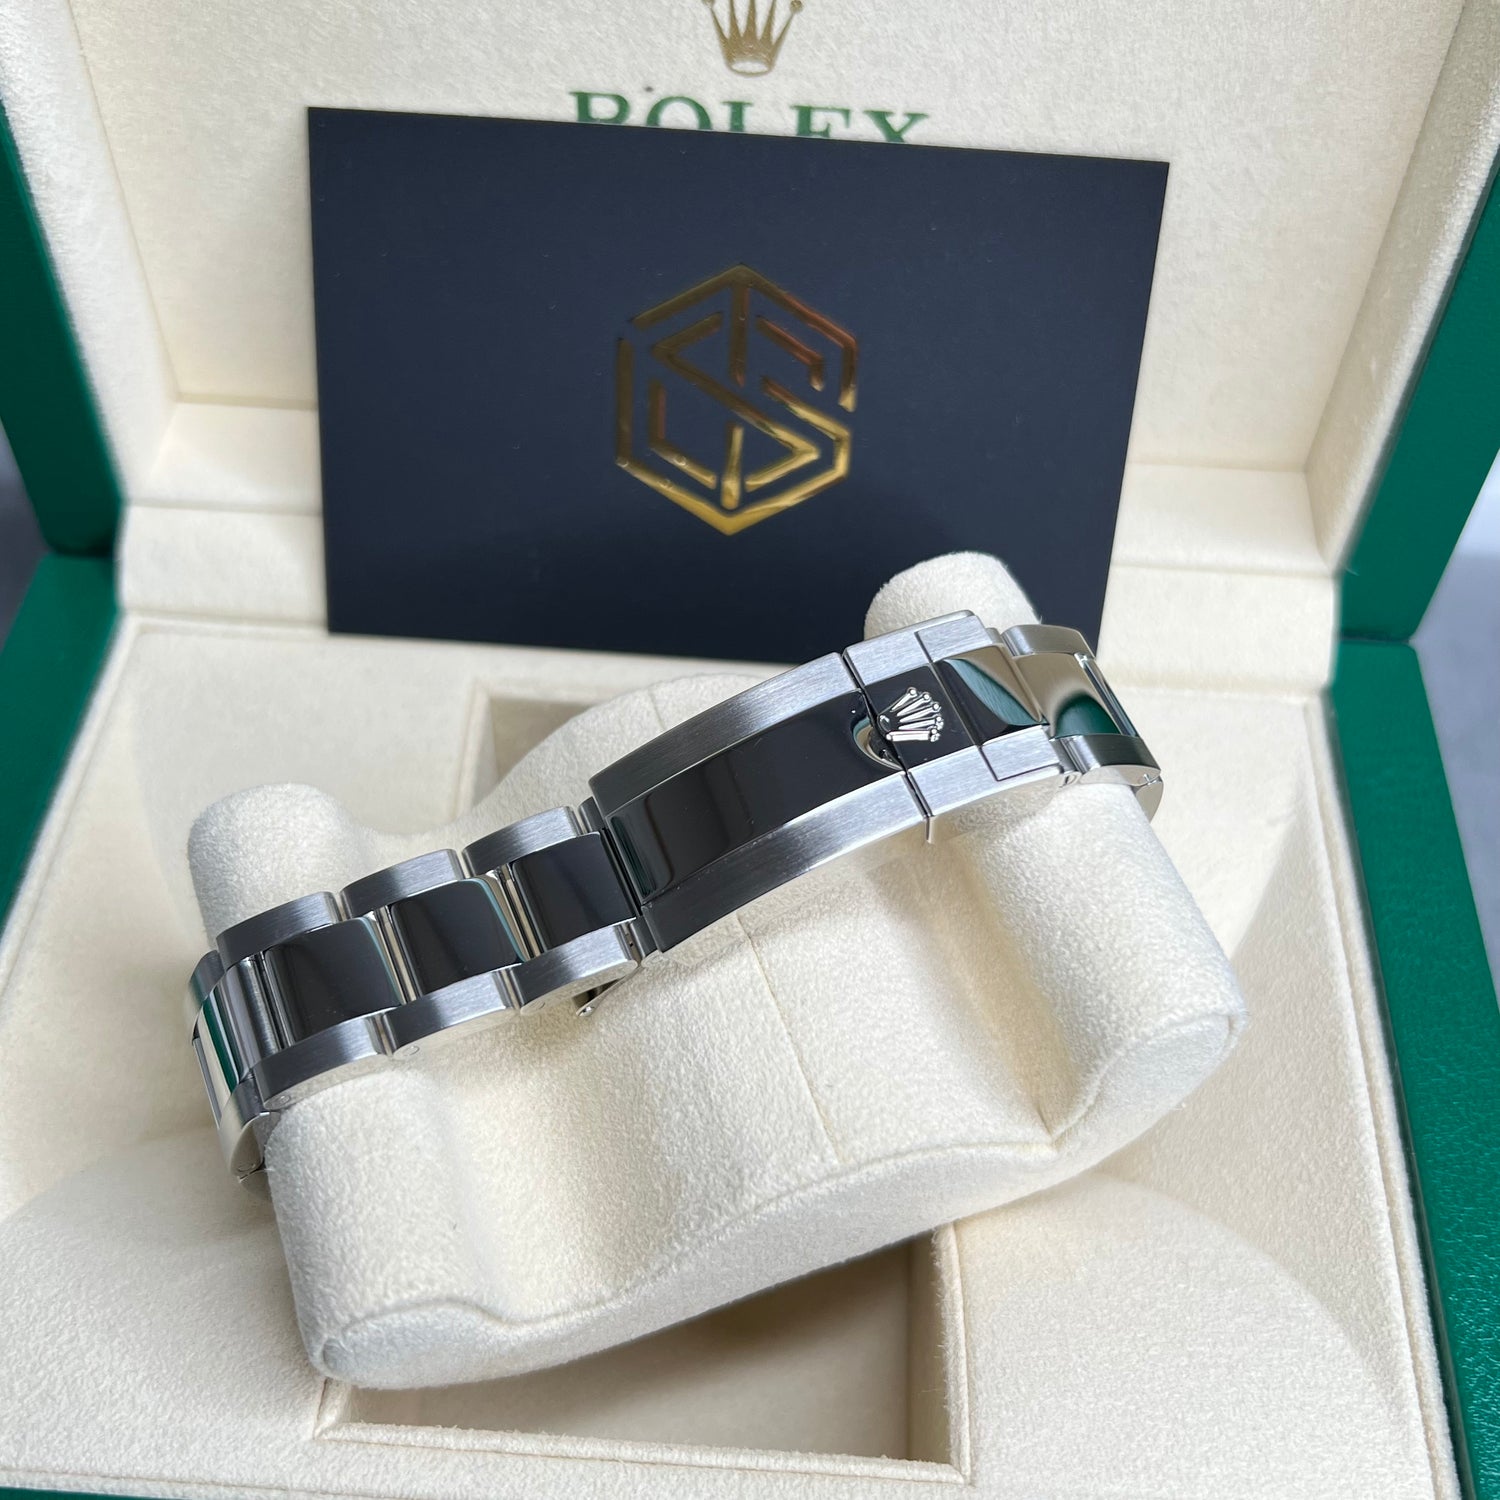 Rolex Cosmograph Daytona Ceramic Black Dial 116500LN 2018 Watch